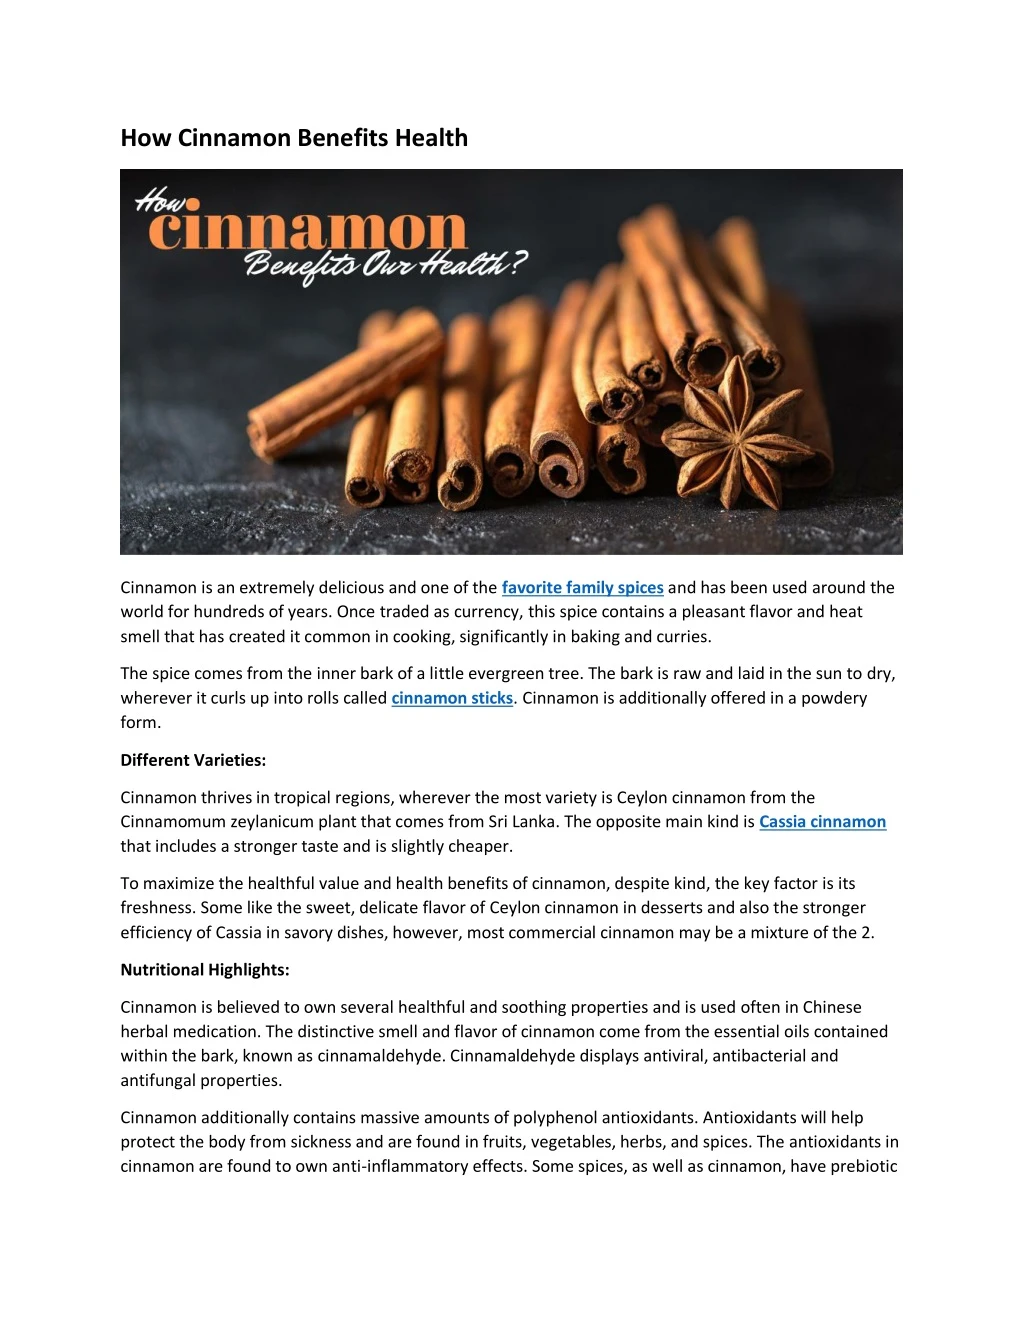 how cinnamon benefits health